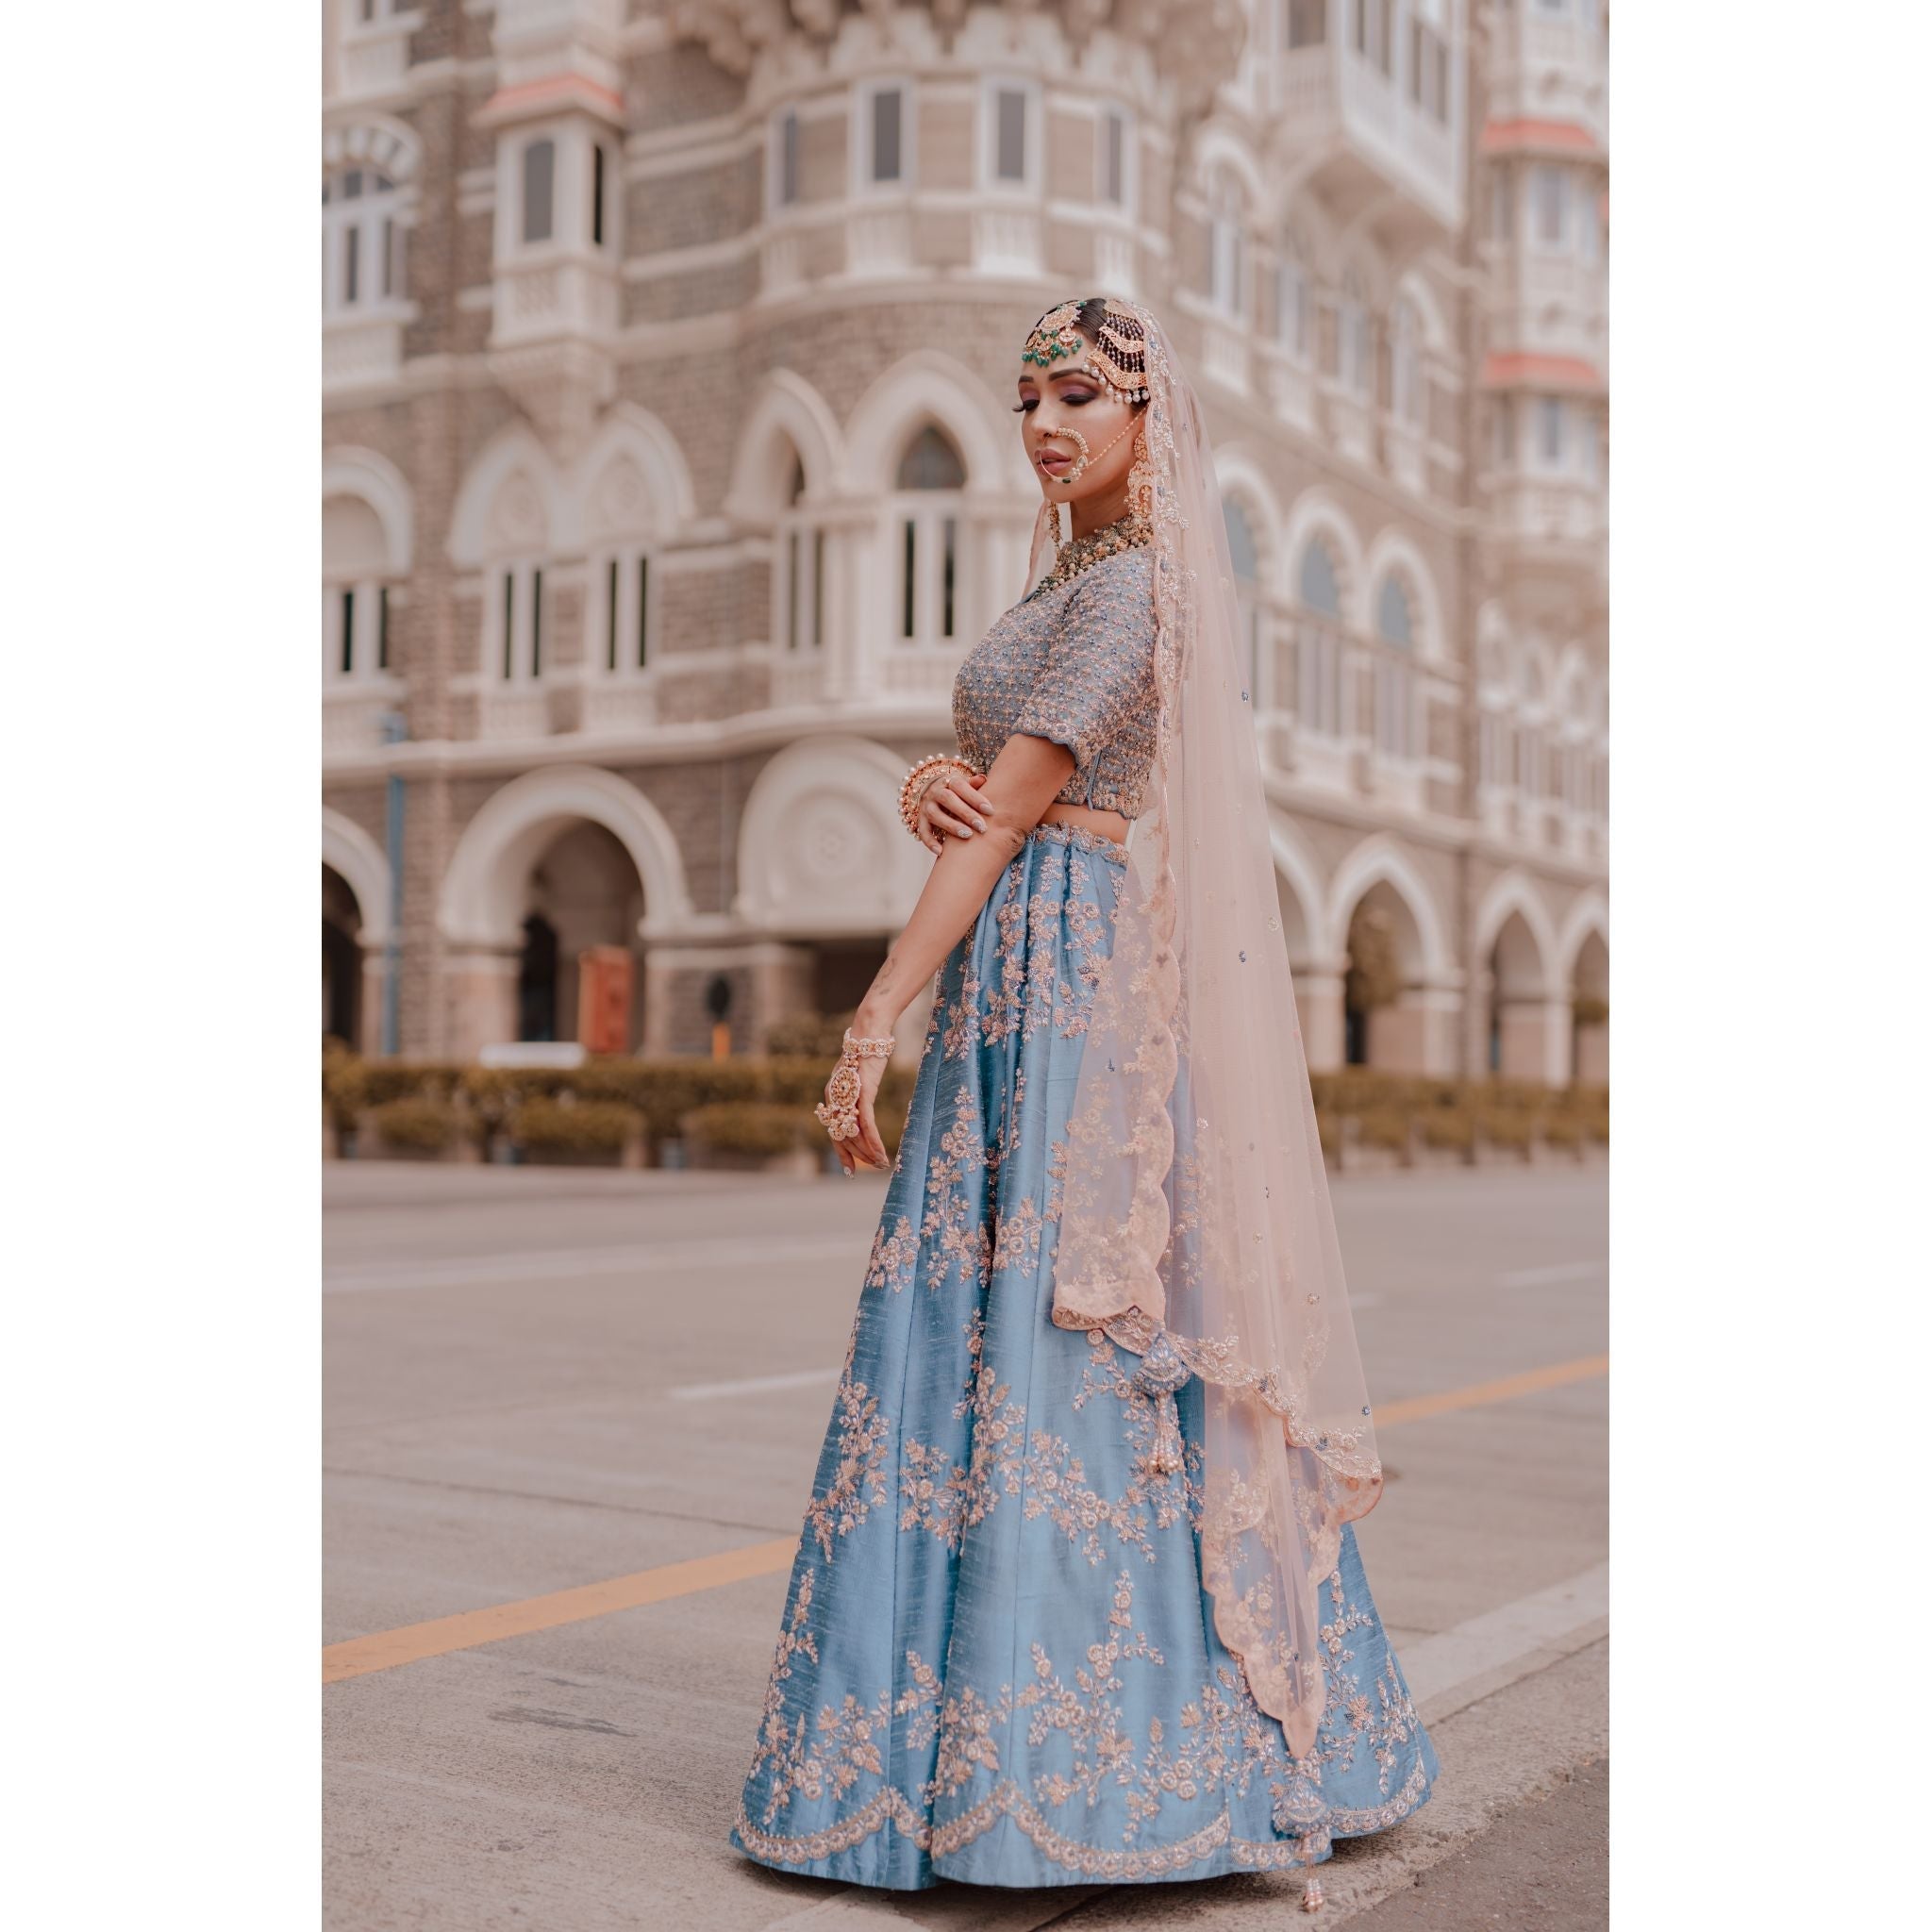 Cobalt Blue and Peach Lehenga Set - Indian Designer Bridal Wedding Outfit